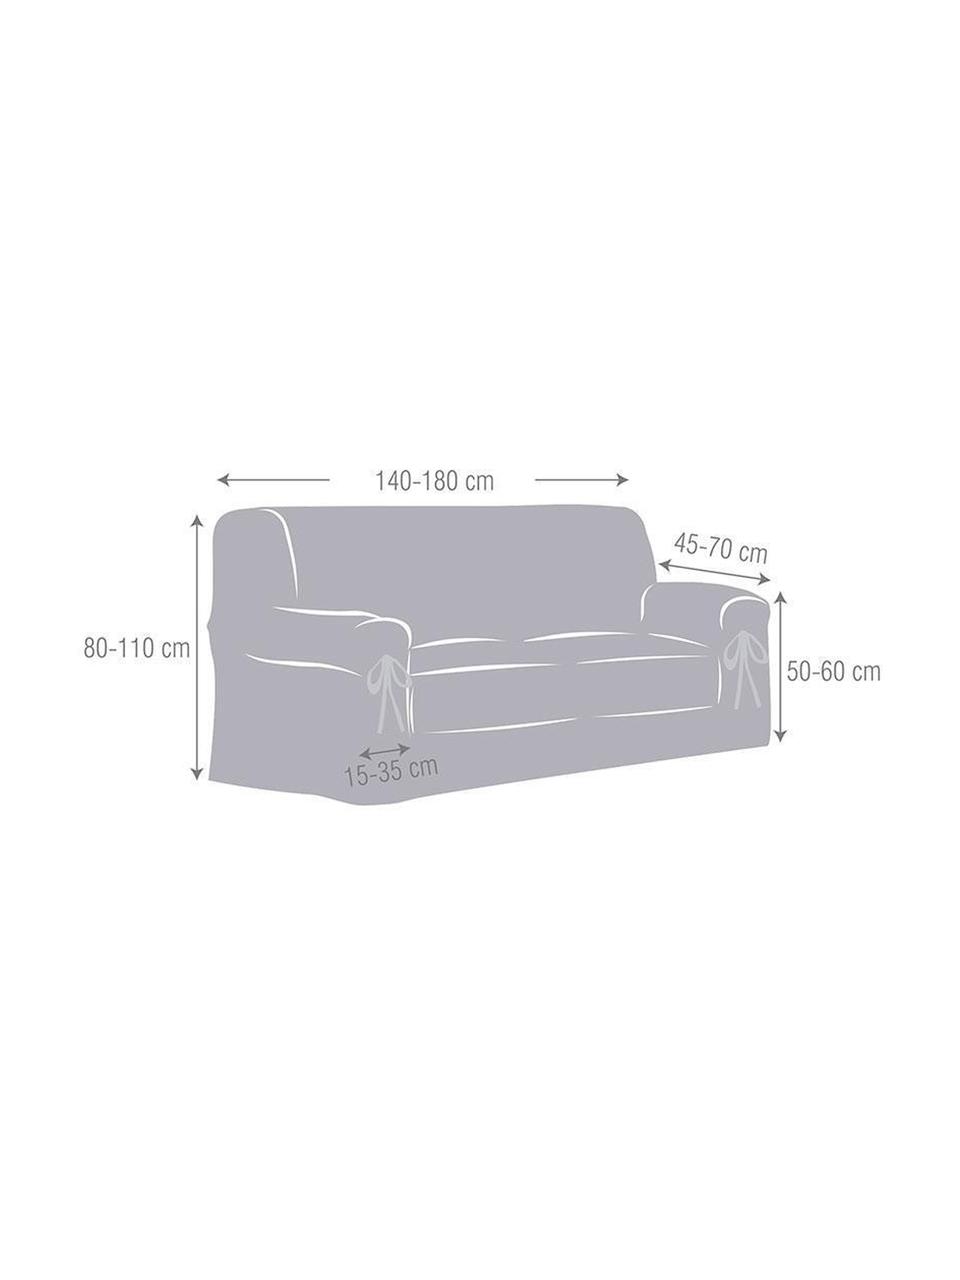 Funda de sofá Levante, 65% algodón, 35% poliéster, Beige, 2 plazas (160 x 110 cm)